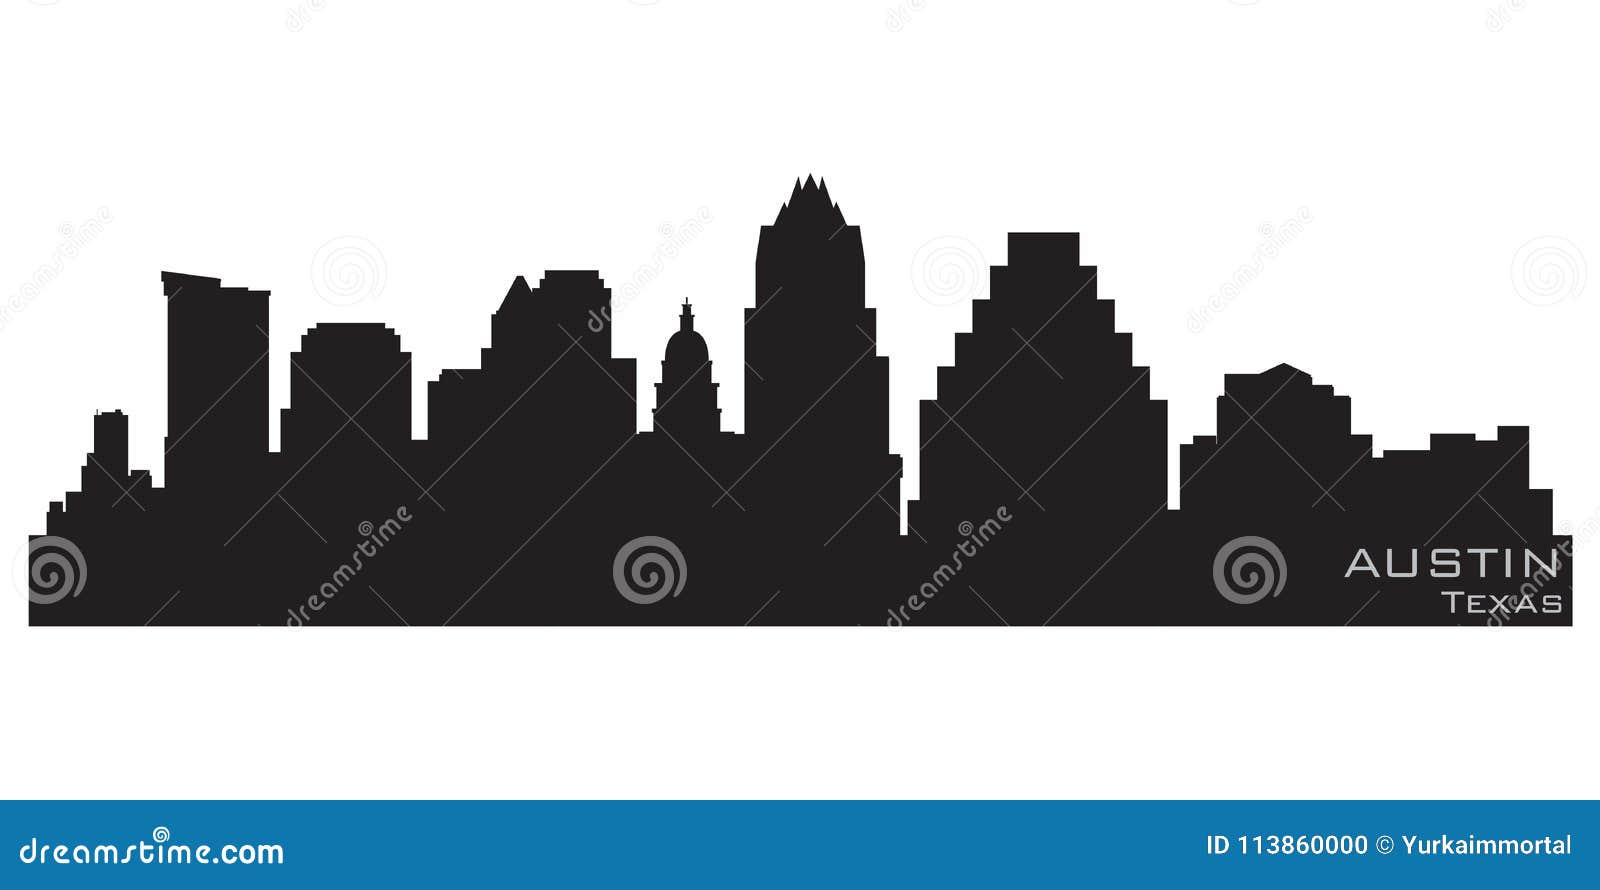 austin texas city skyline. detailed  silhouette